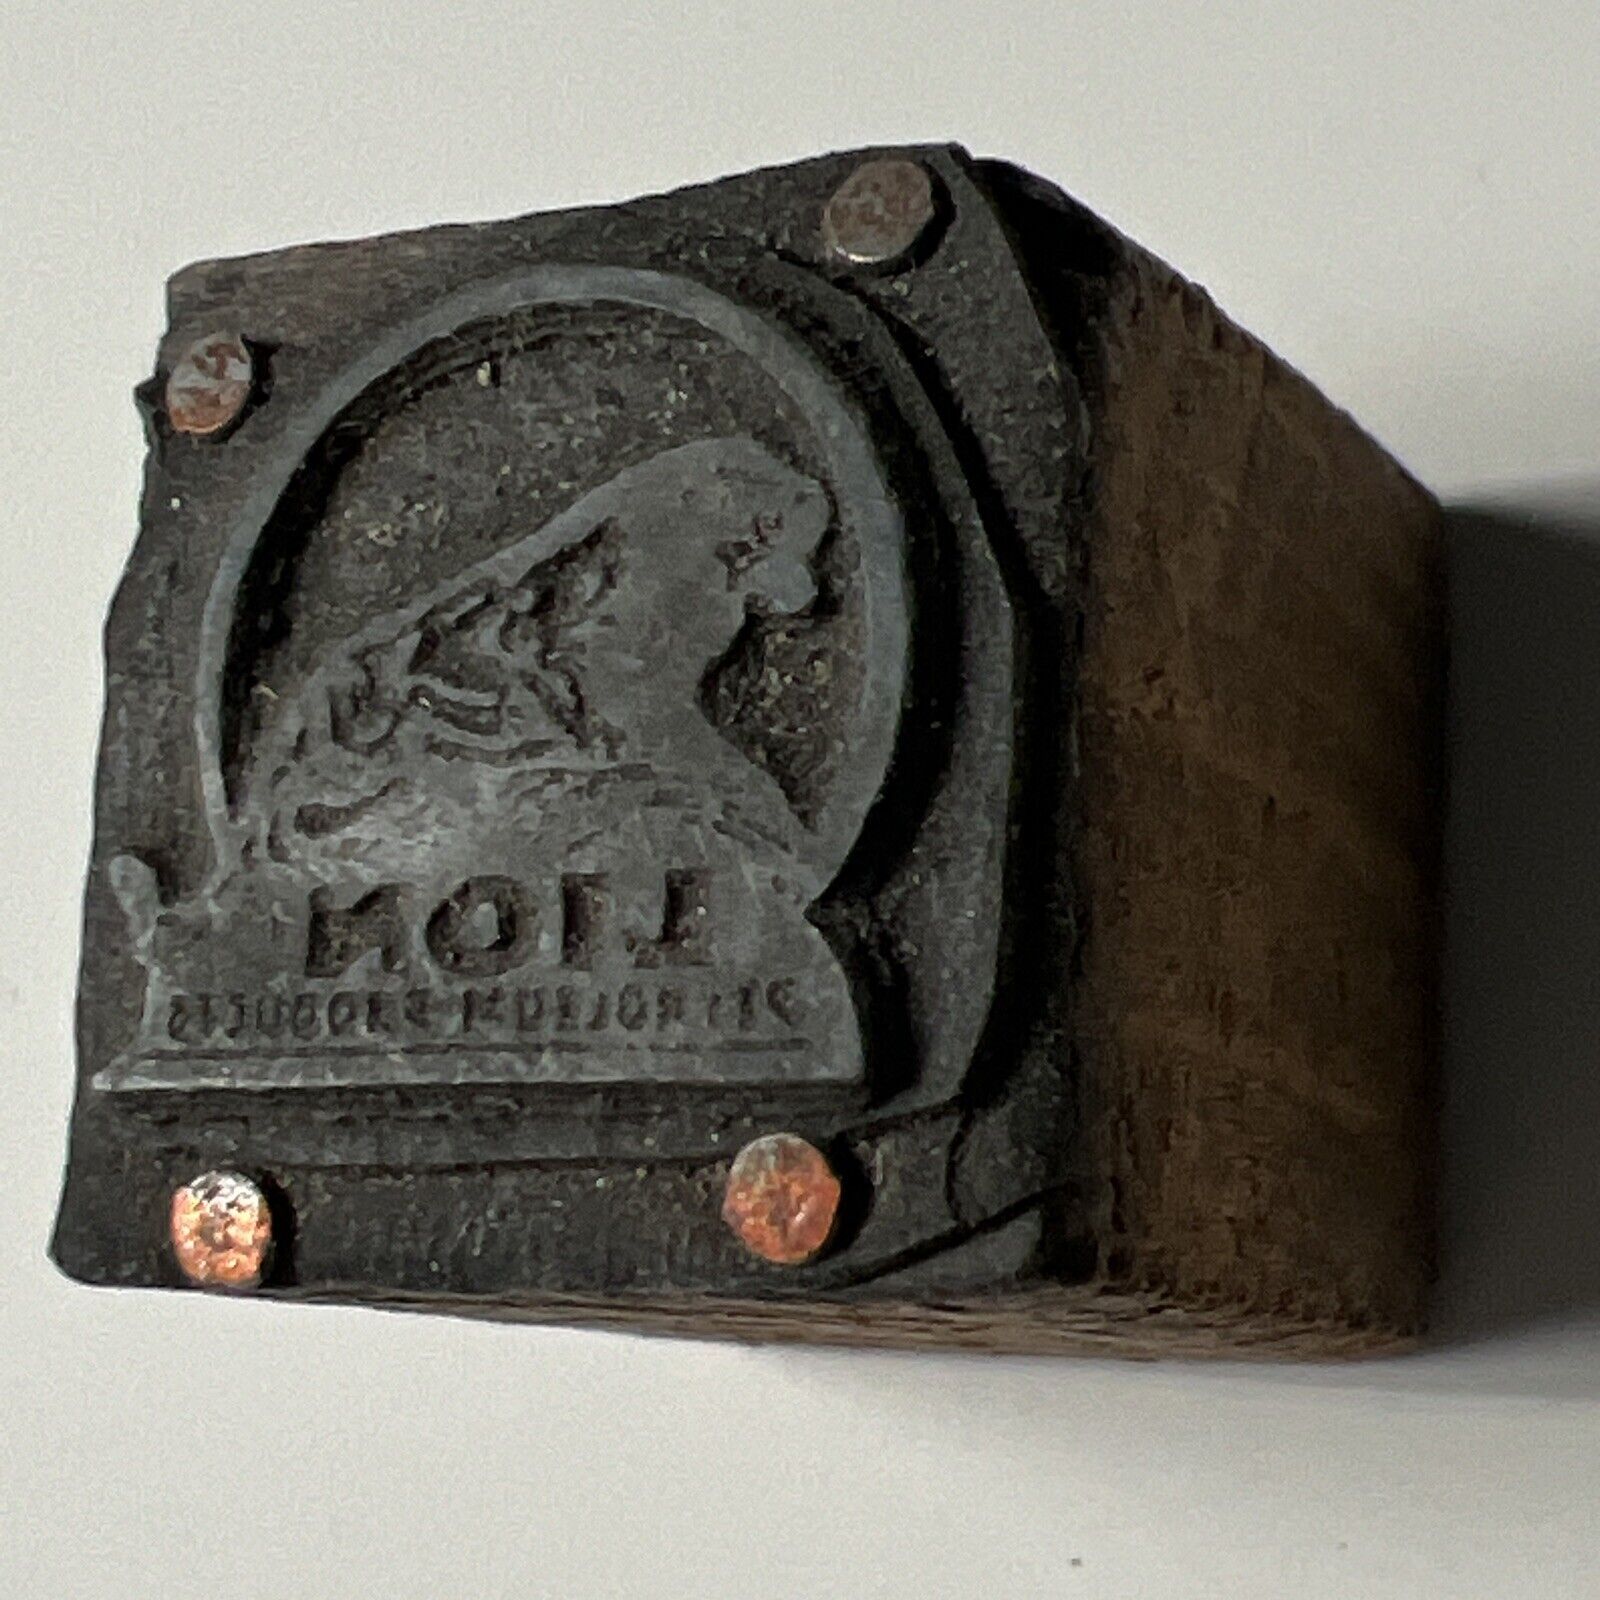 RARE vintage 1930s LION PETROLEUM PRODUCTS Printer Metal Wood Block Stamp